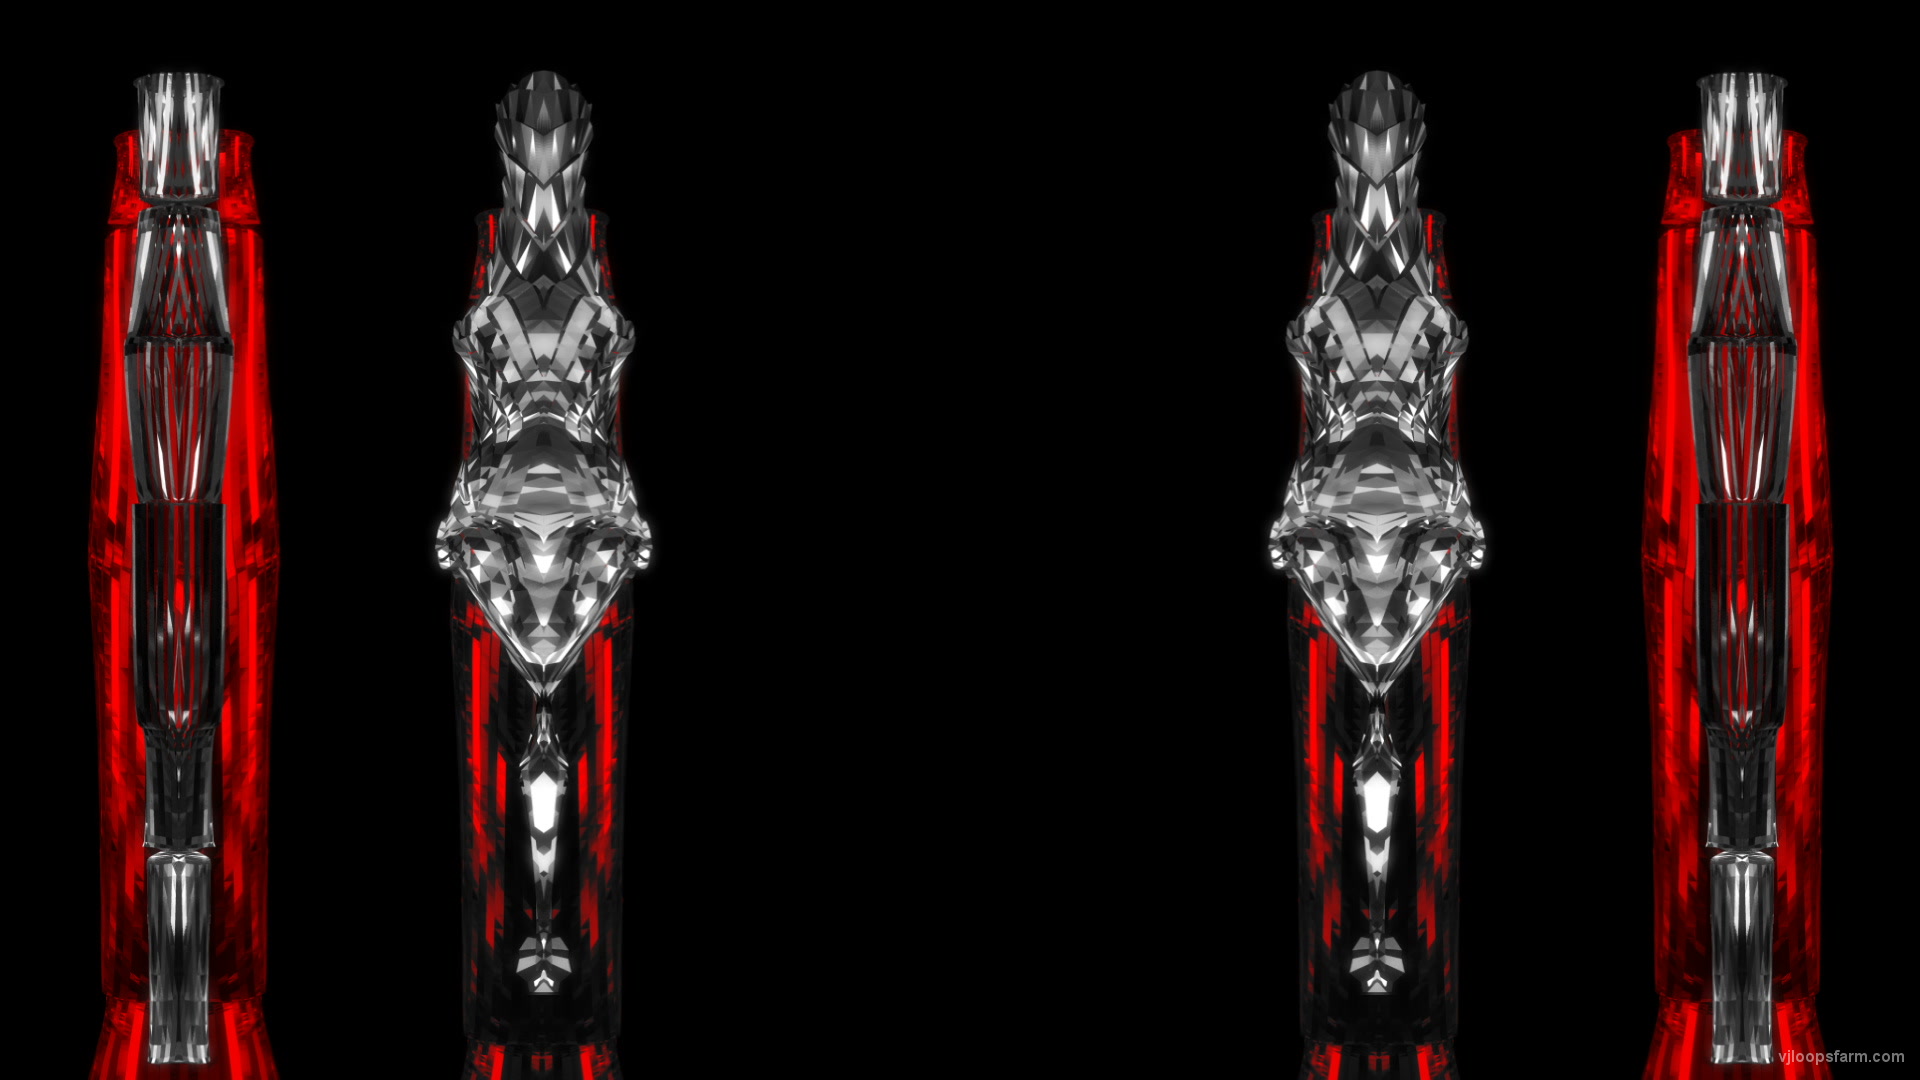 Crystal Shiny Pillars Full HD VJ Loop